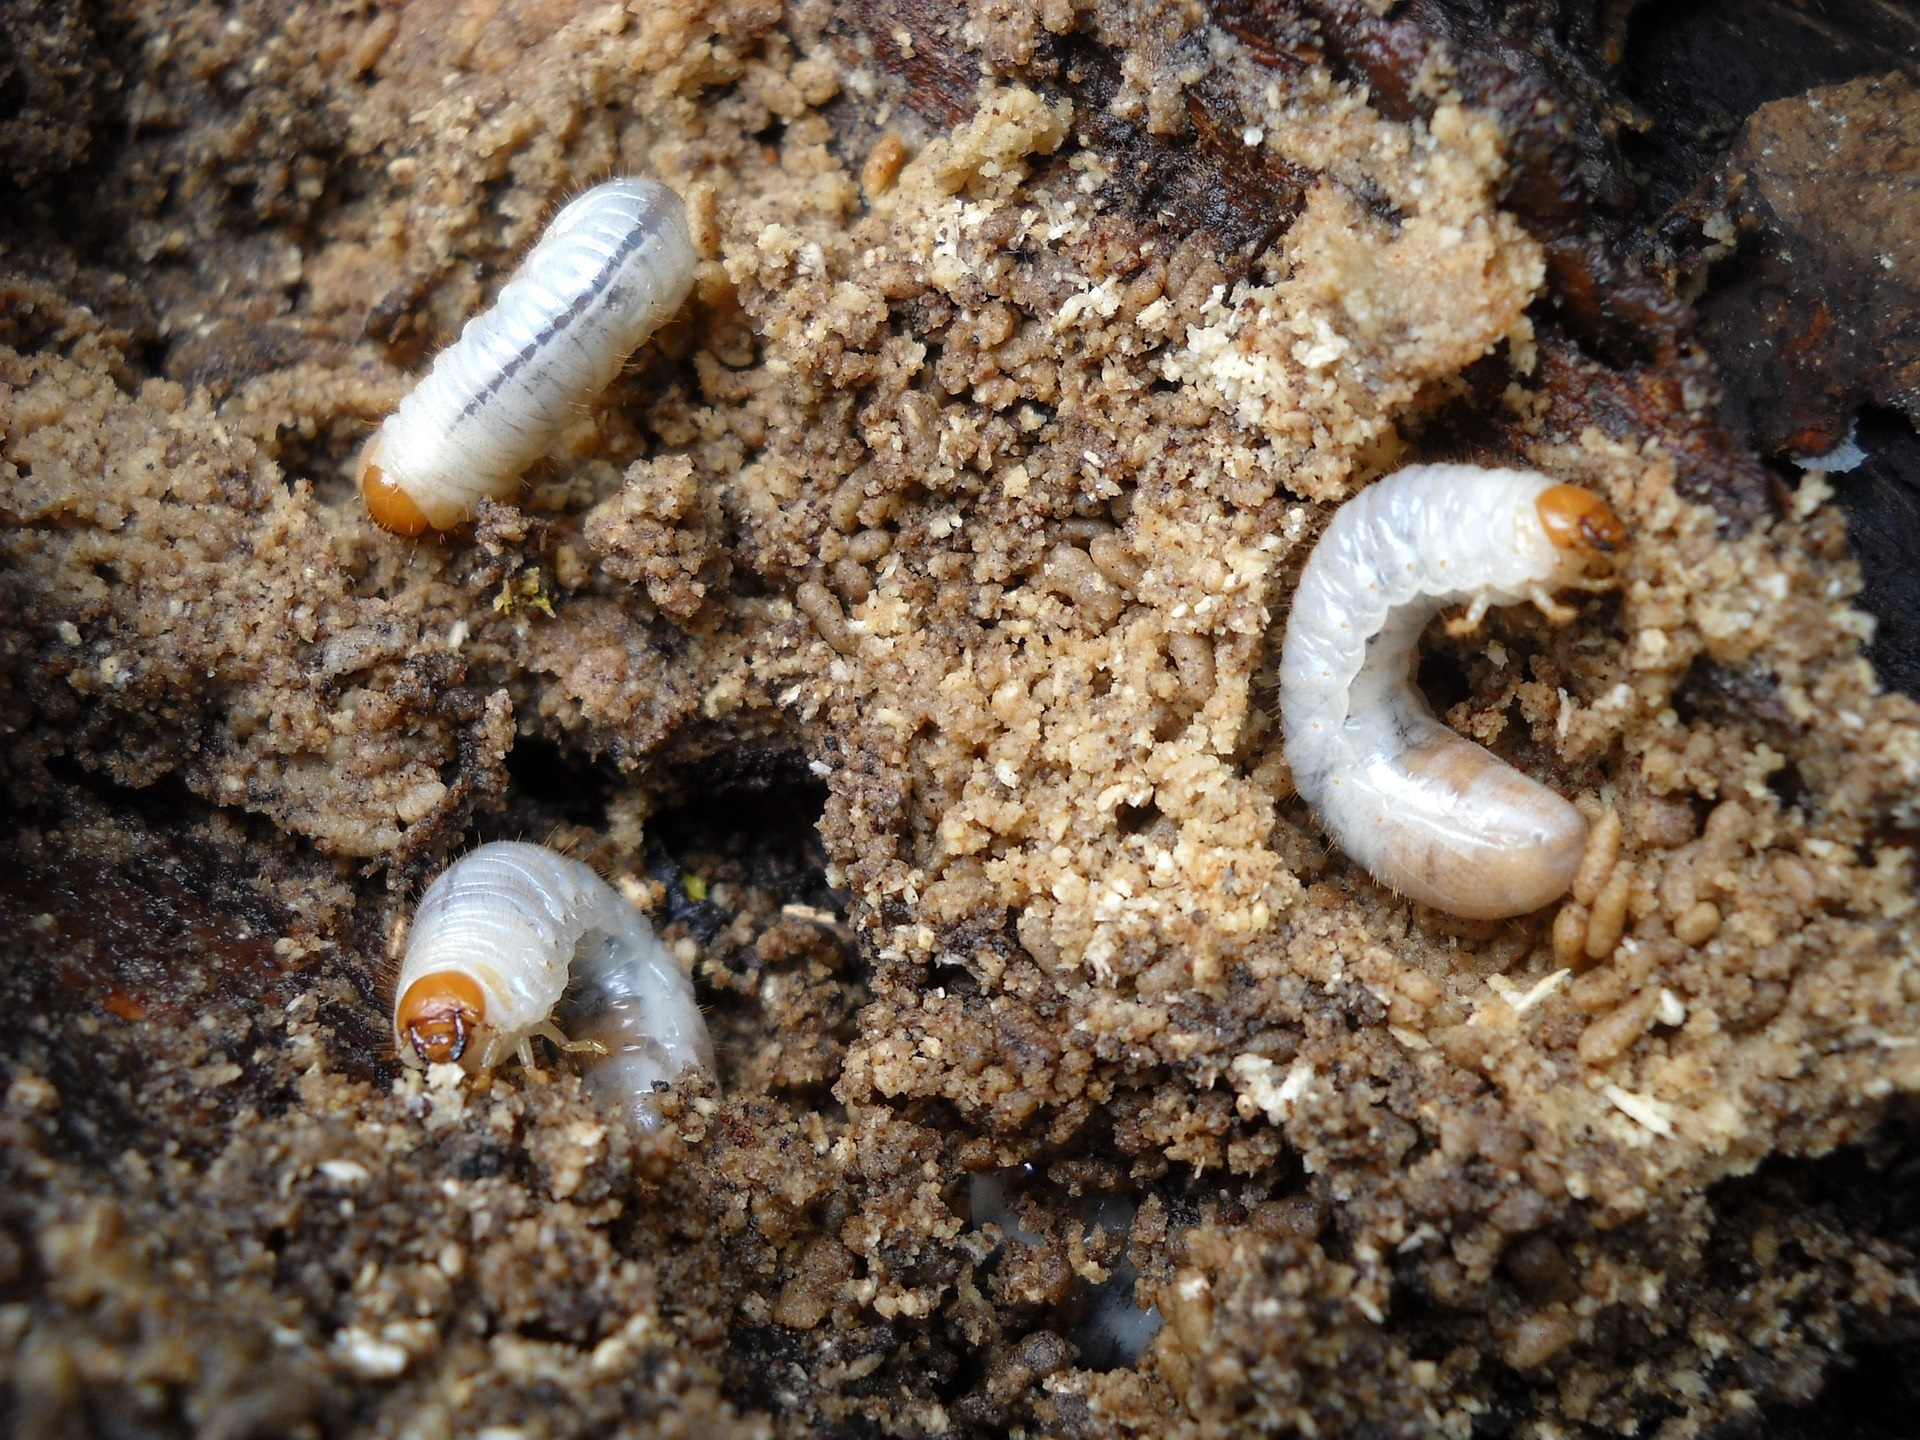 Photograph of 3 white grubs in soils. 